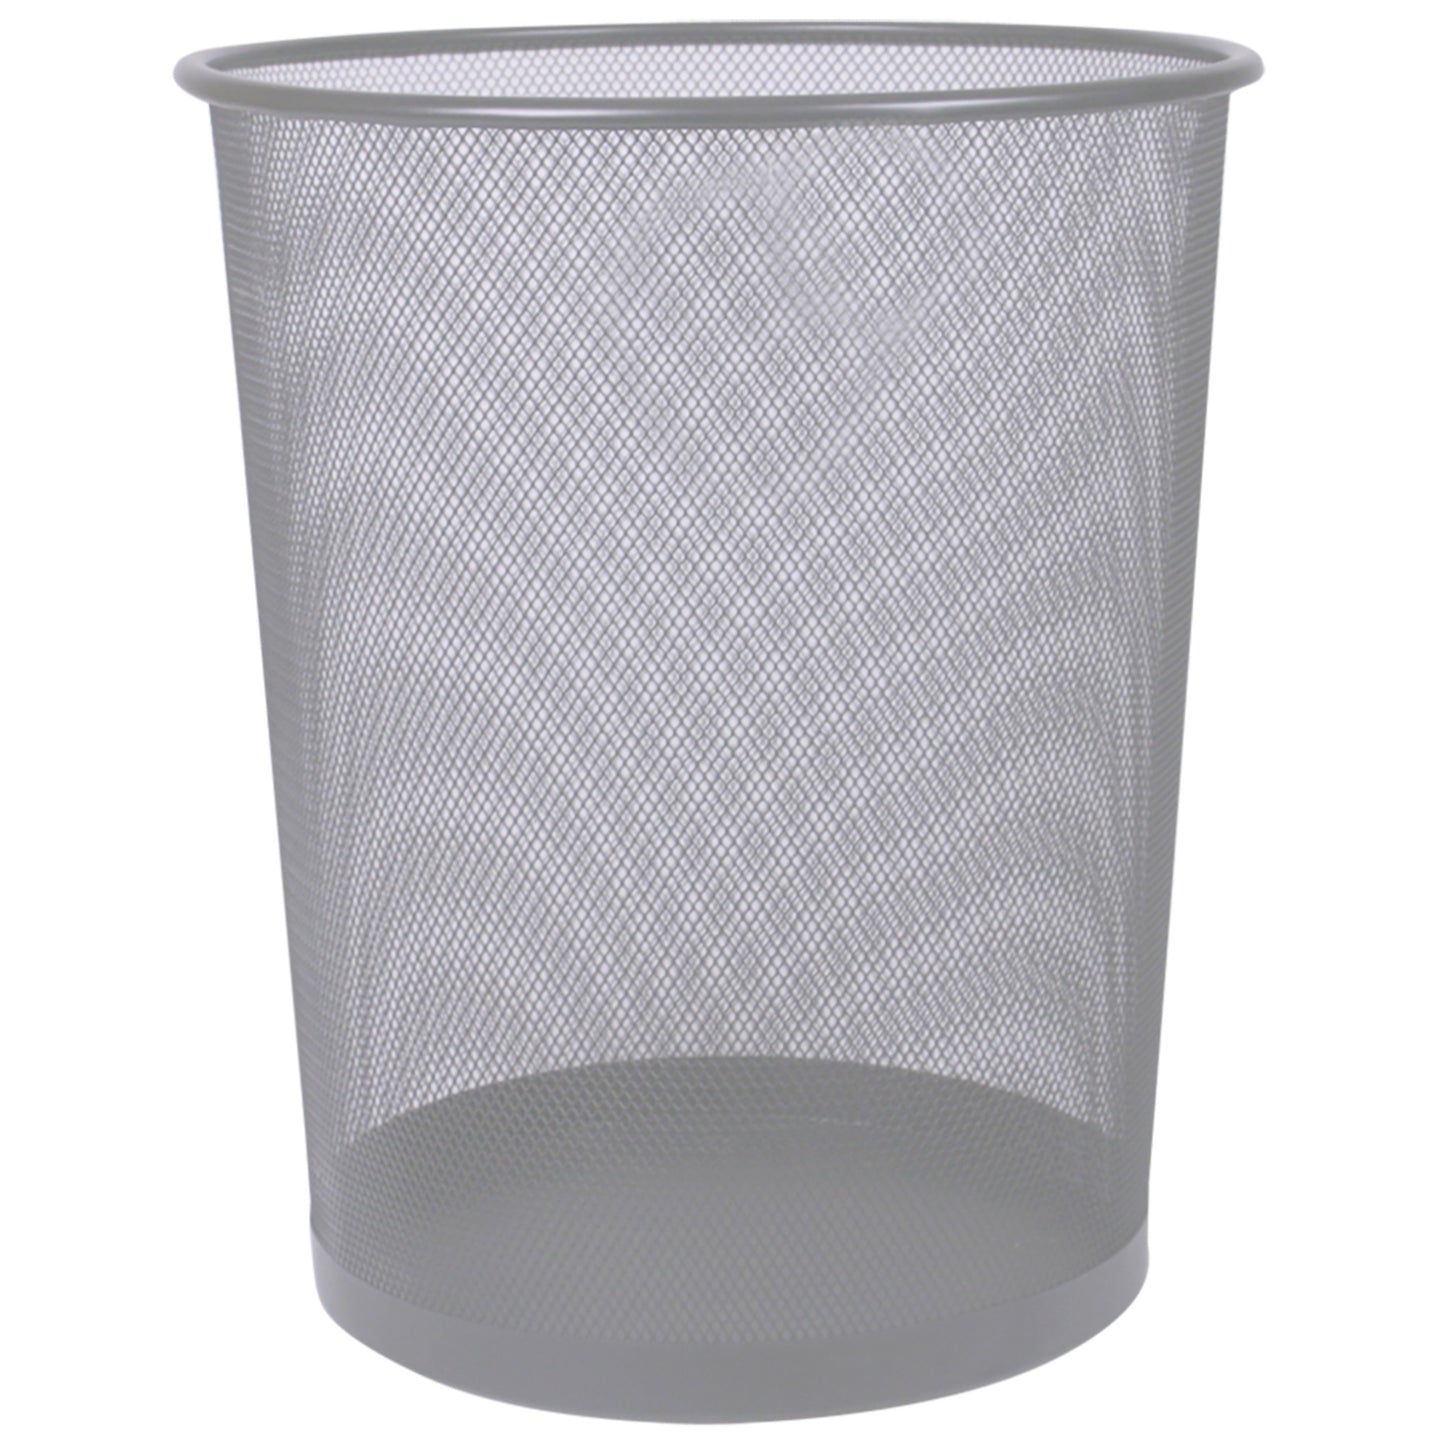 Home Basics Mesh Steel Waste Basket, Silver - Silver